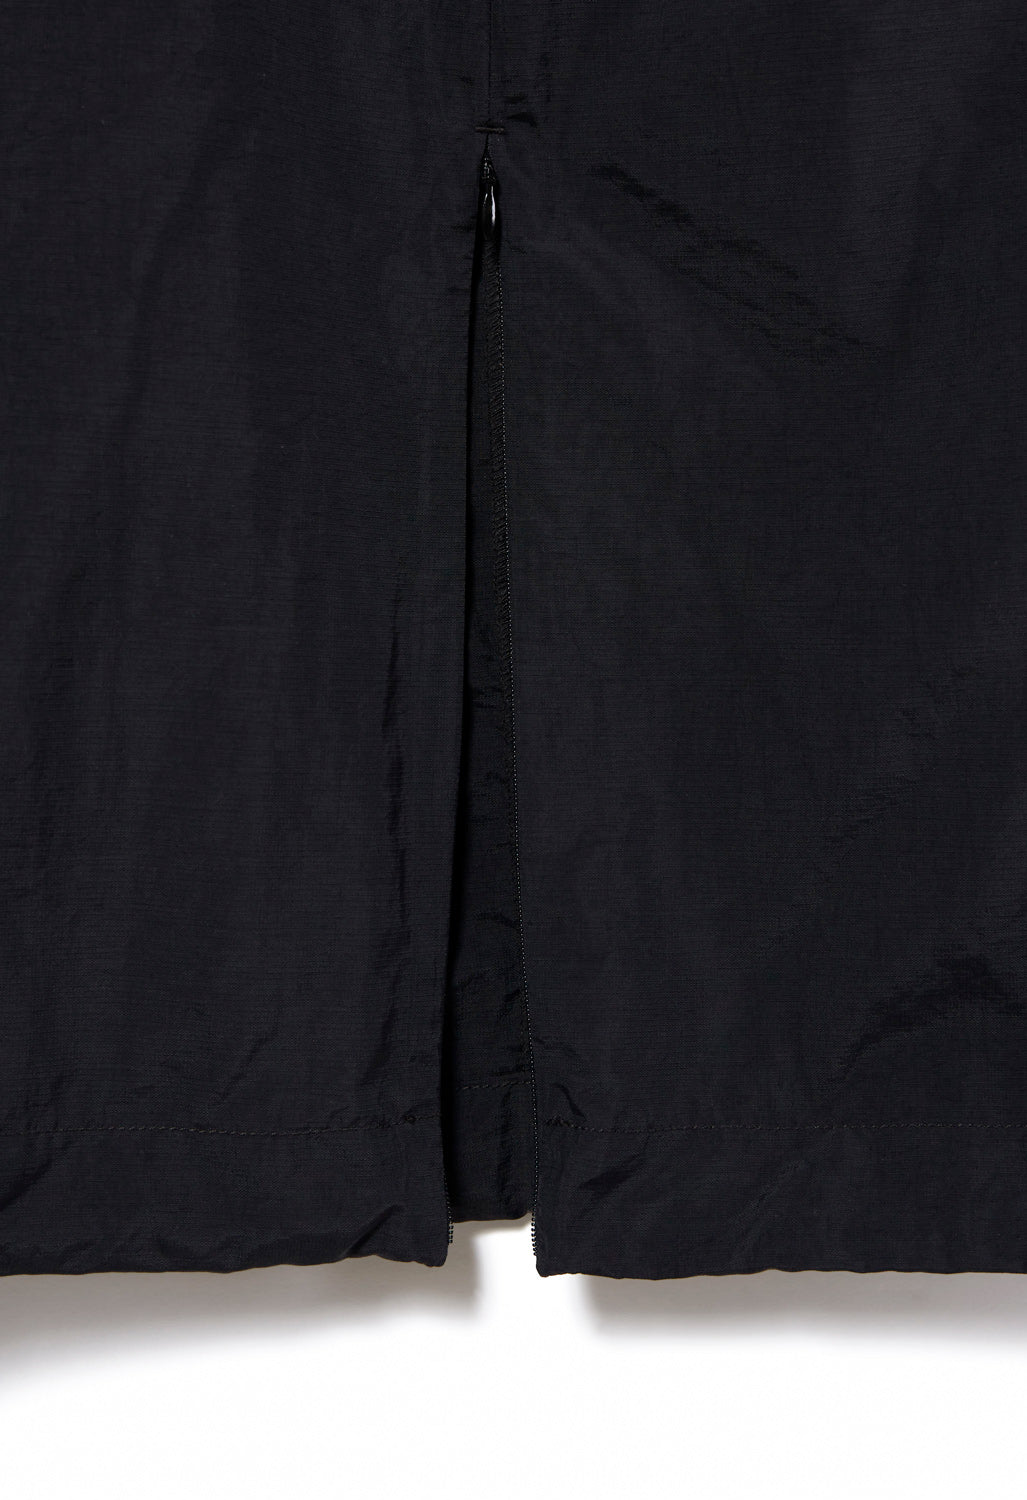 Gramicci Women's Convertible Micro Ripstop Skirt - Black